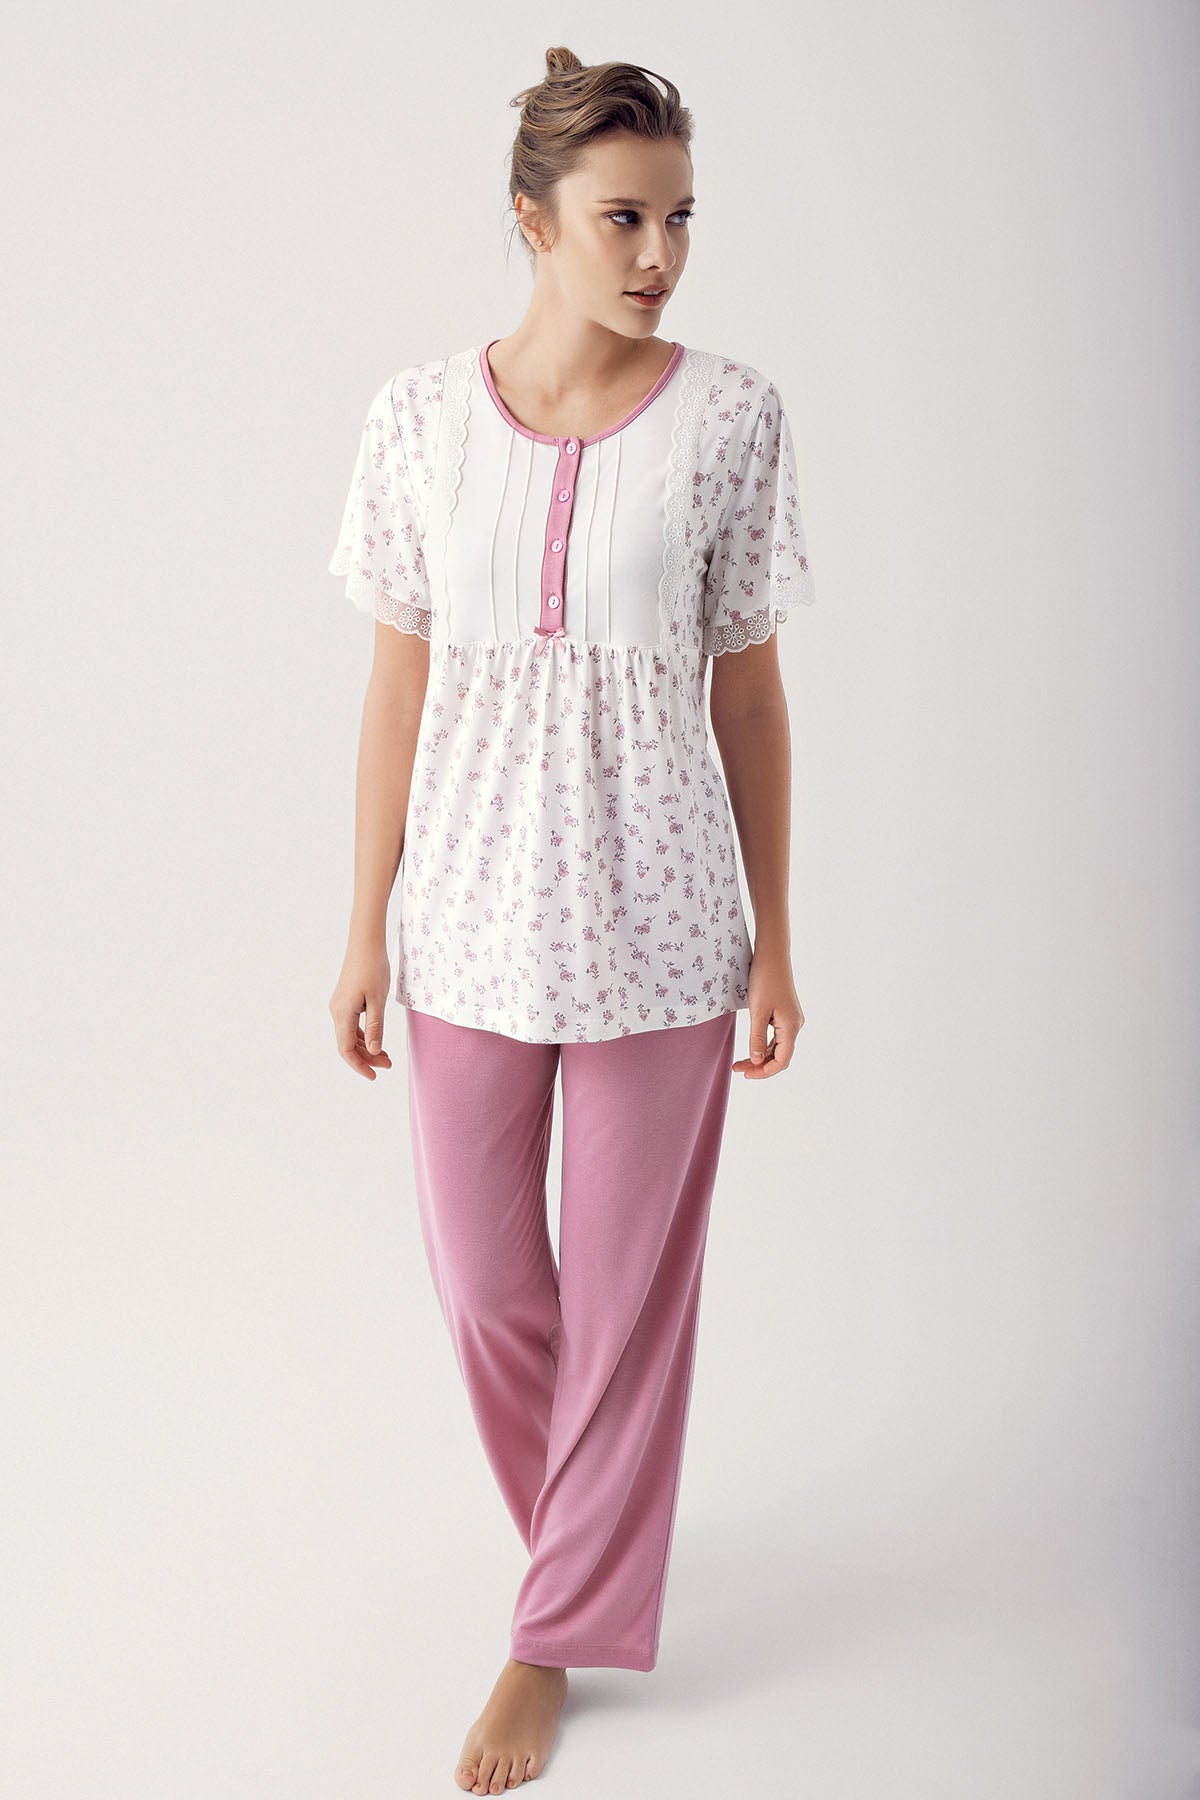 Shopymommy 14201 Flower Pattern Lace Plus Size Maternity & Nursing Pajamas Dried Rose